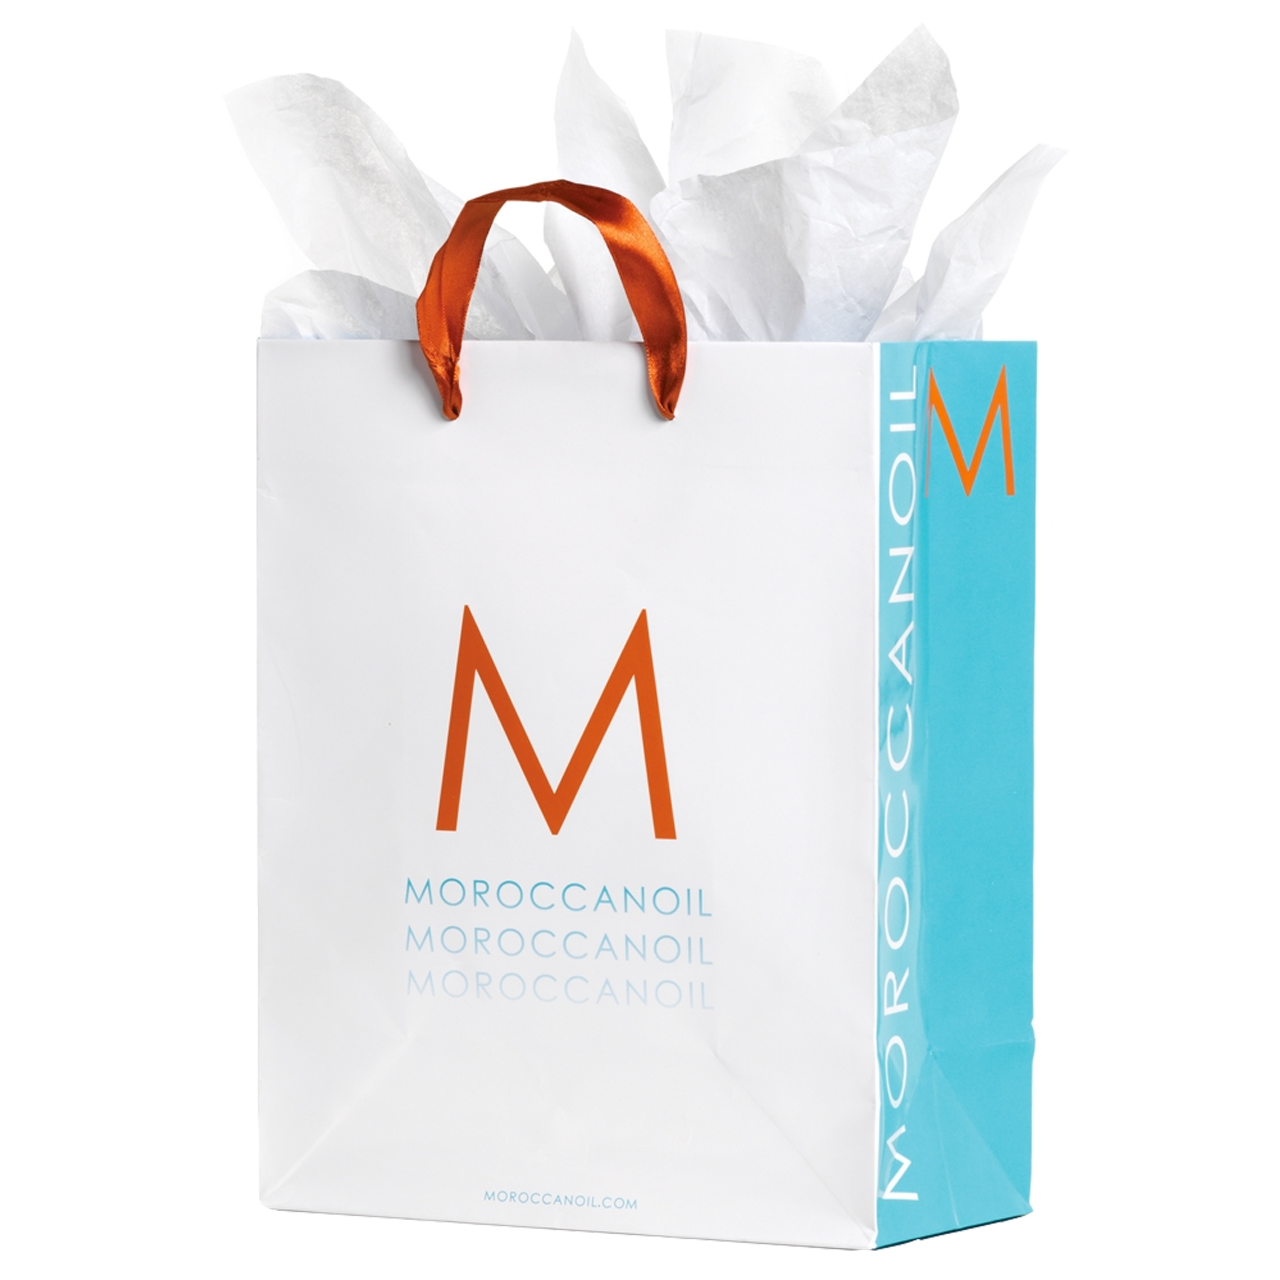 MOROCCANOIL Small Retail Bags 25 pk.